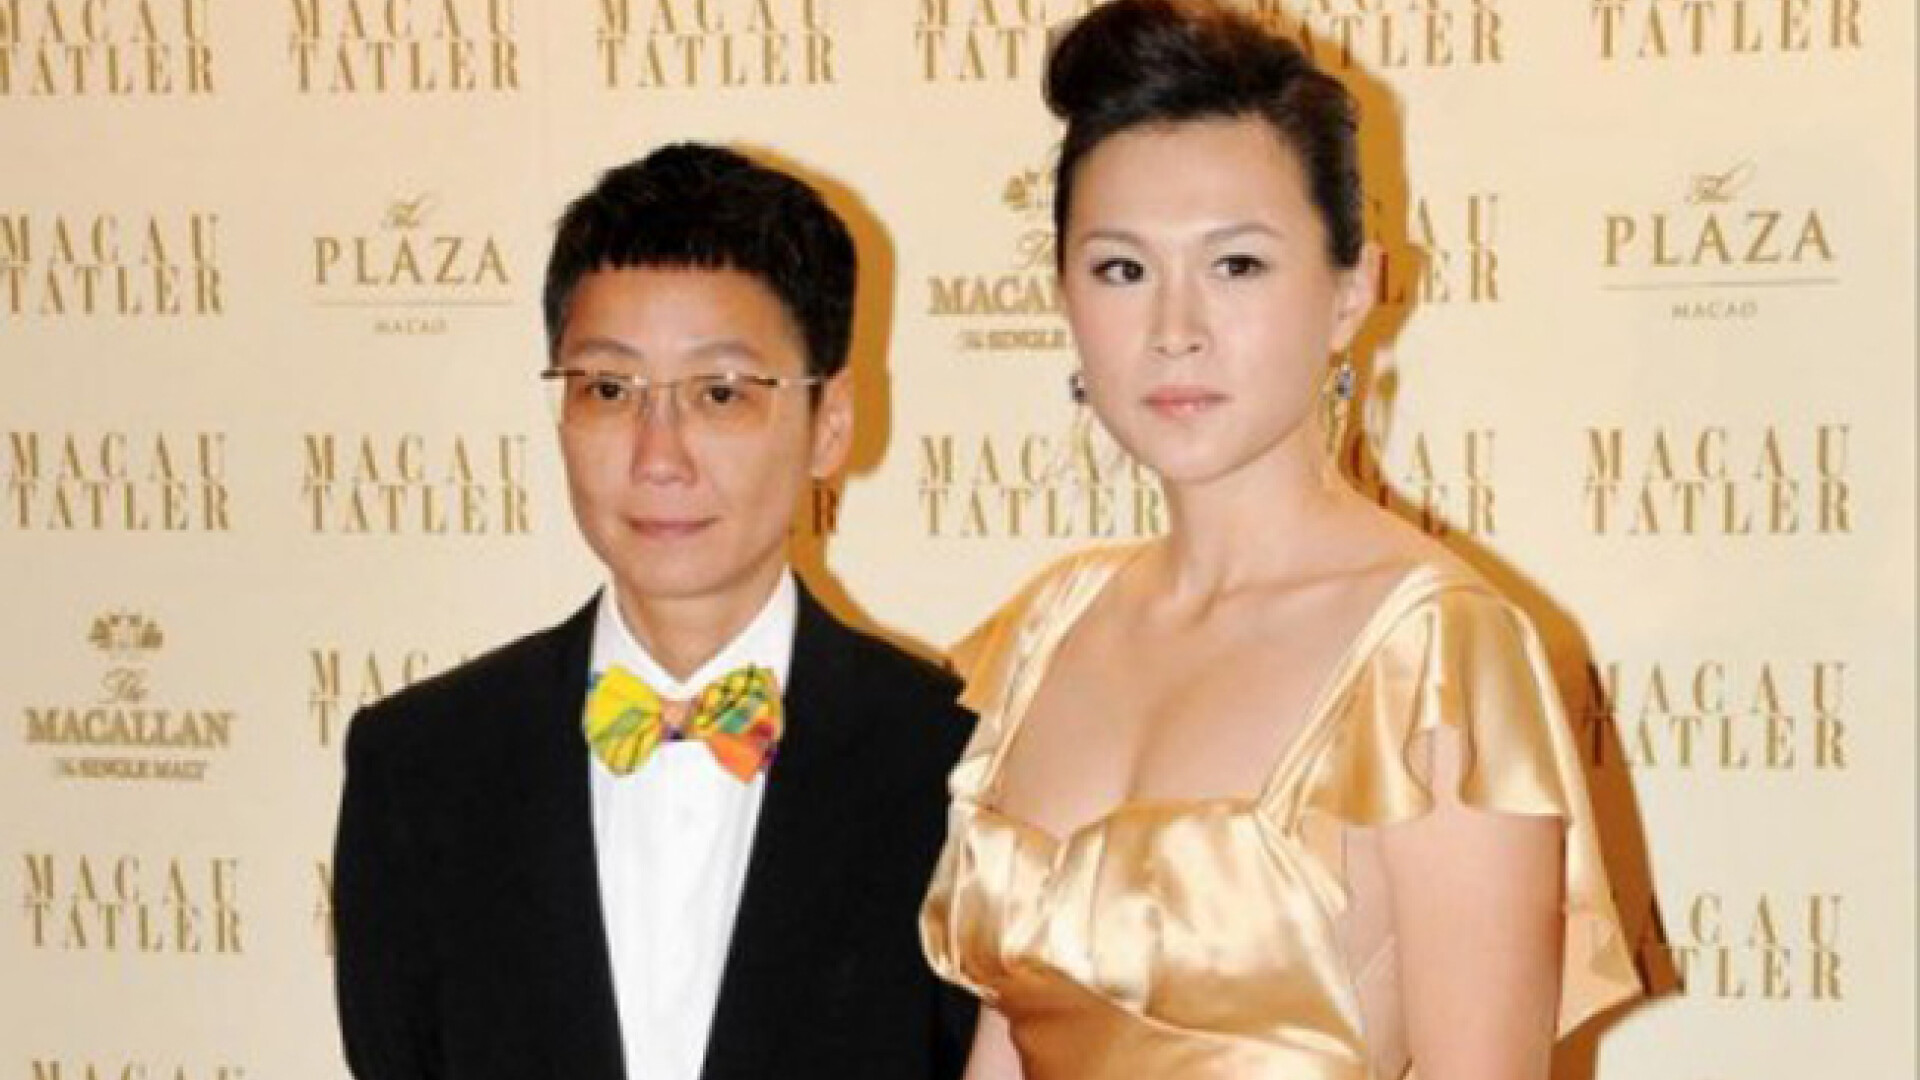 fata lesbiana, miliardar chinez